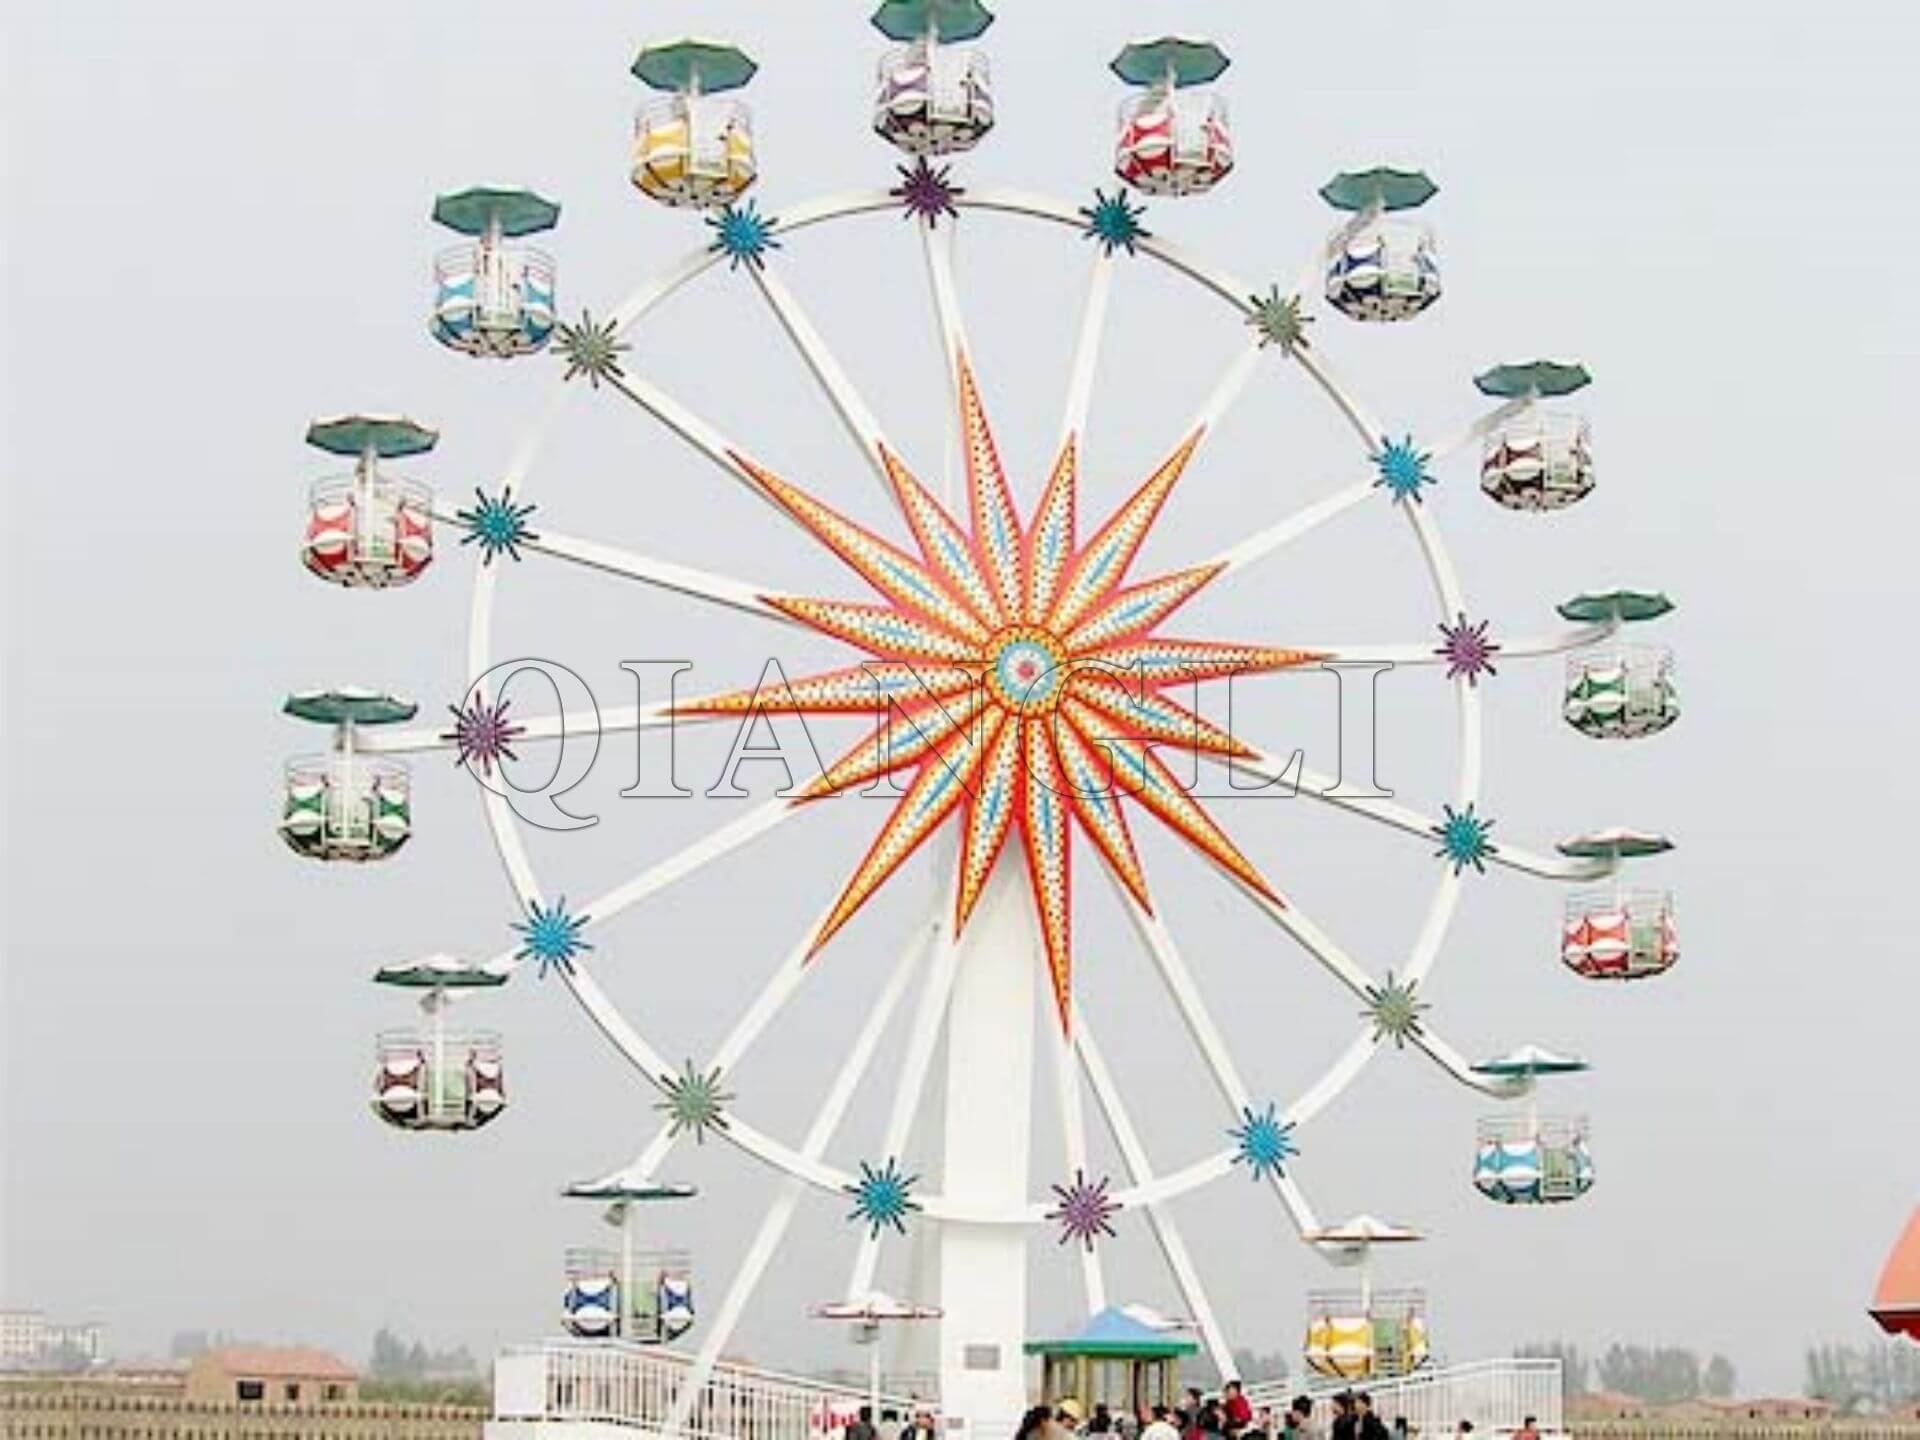 25m Ferris wheel exported to Yemen